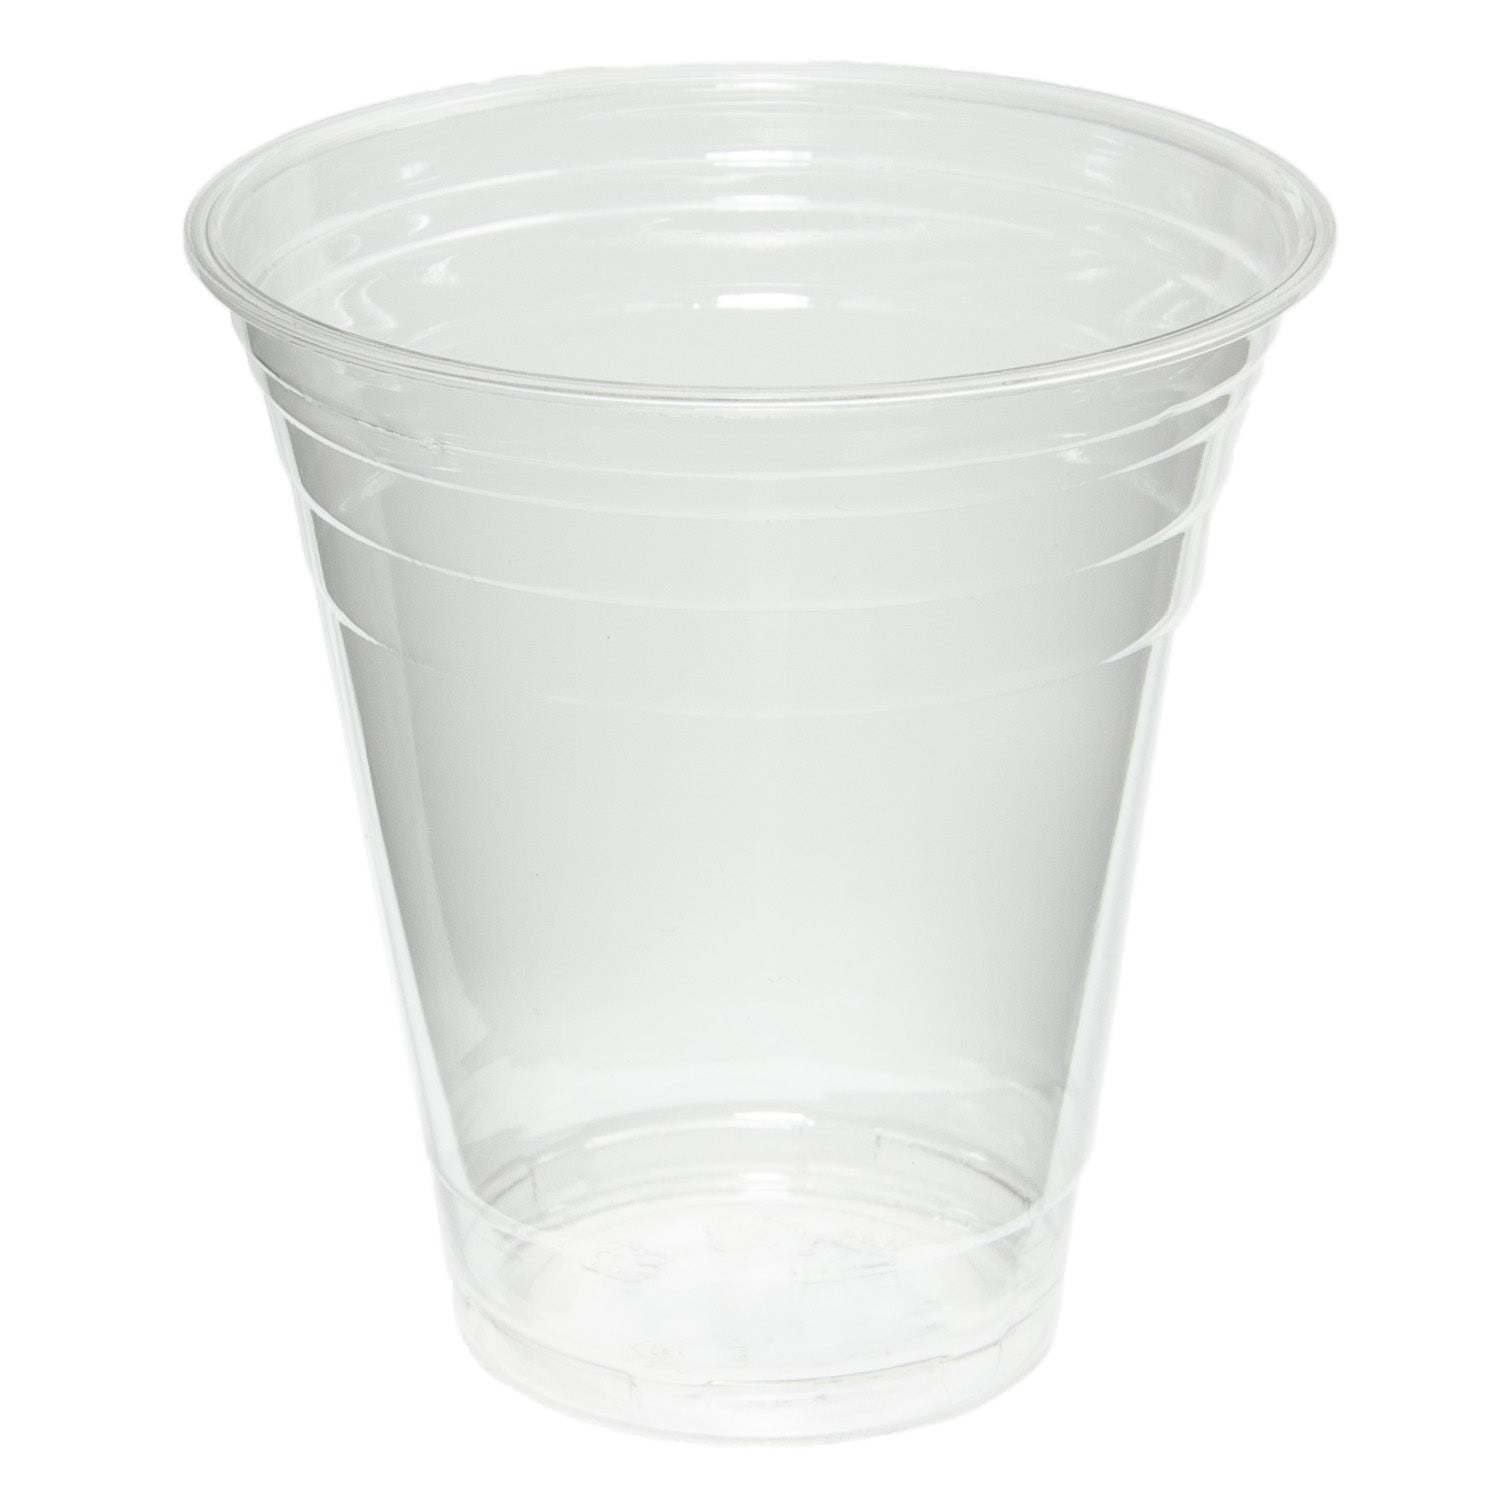 Sample 16 oz Disposable Plastic Bowls with Lids